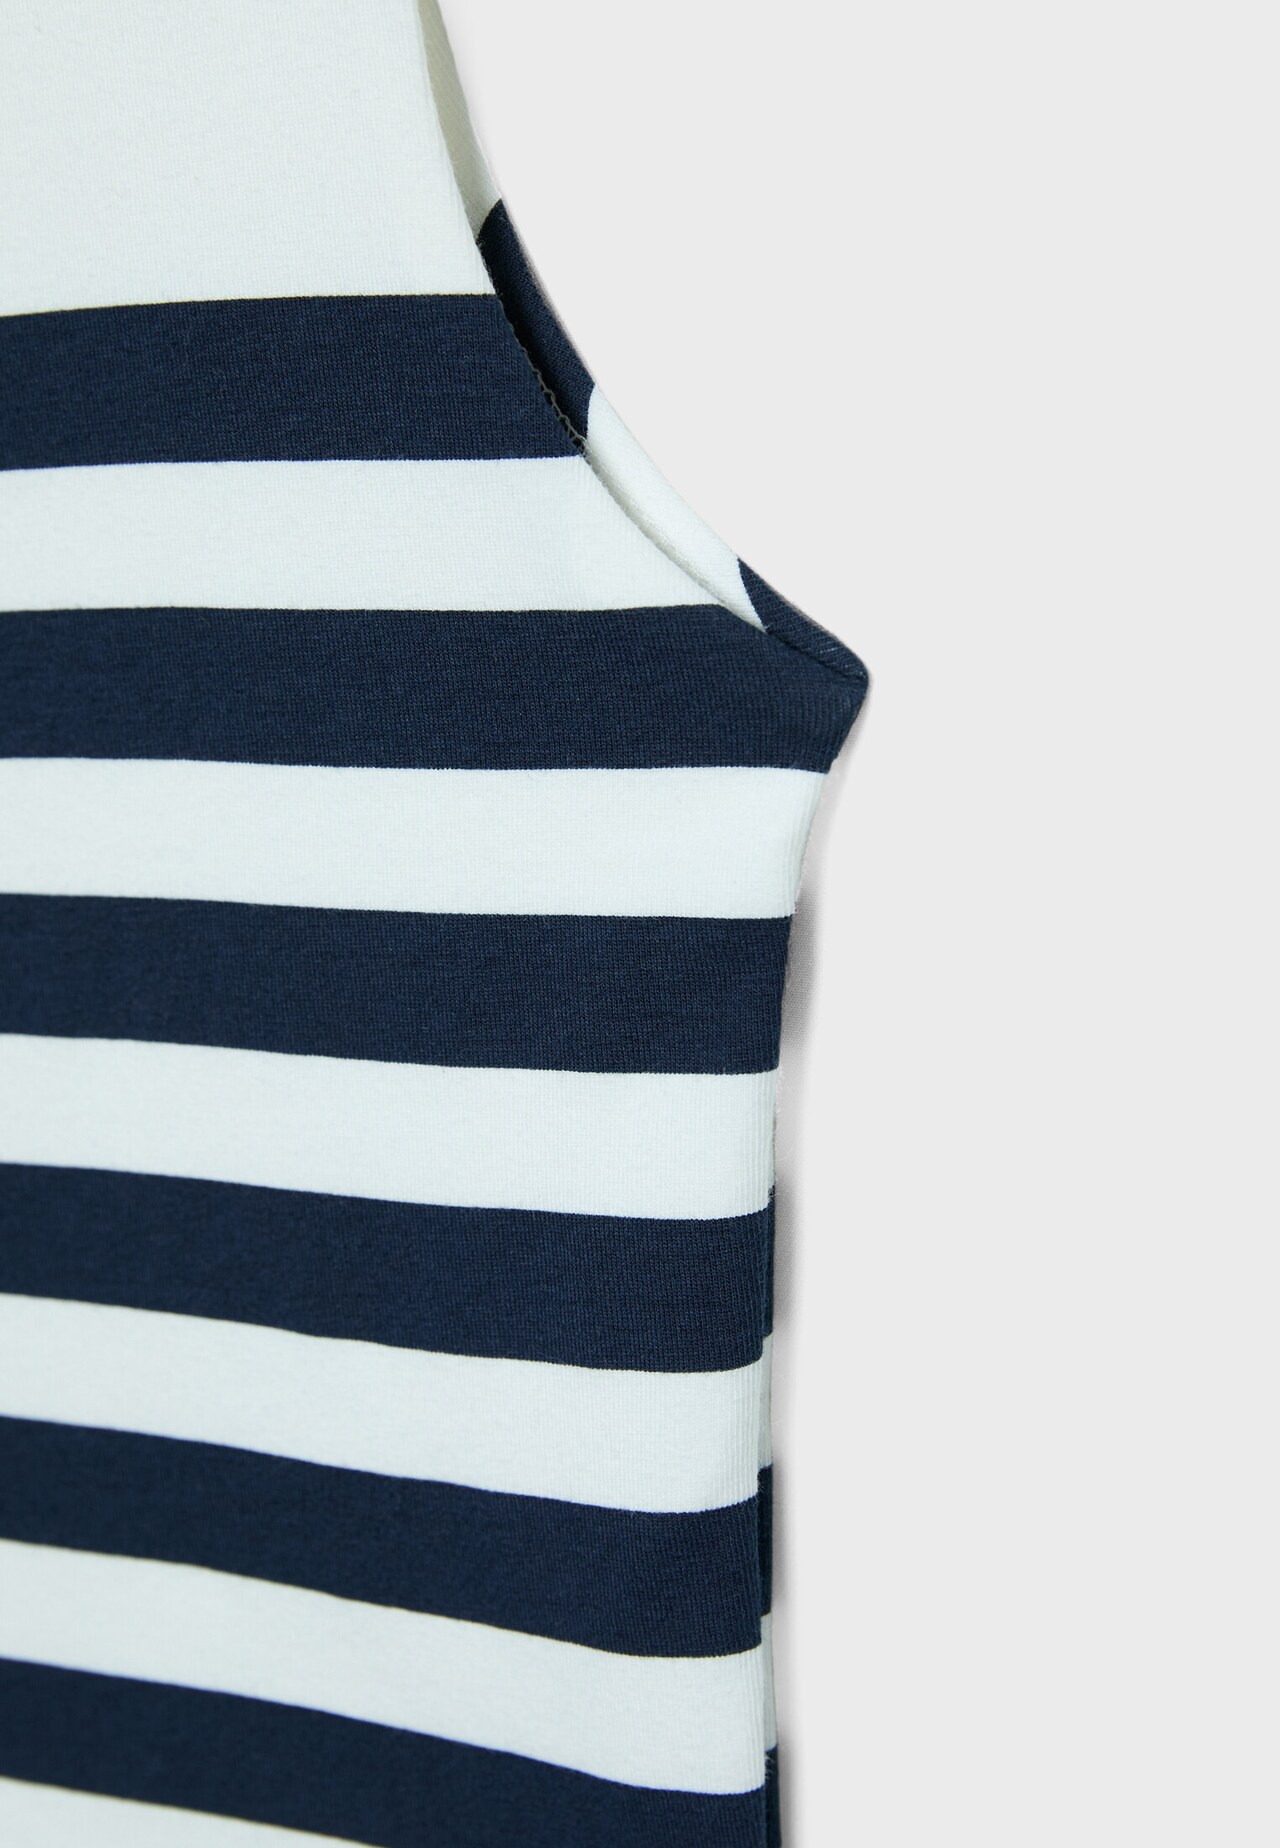 Striped cotton vest top - Women's fashion